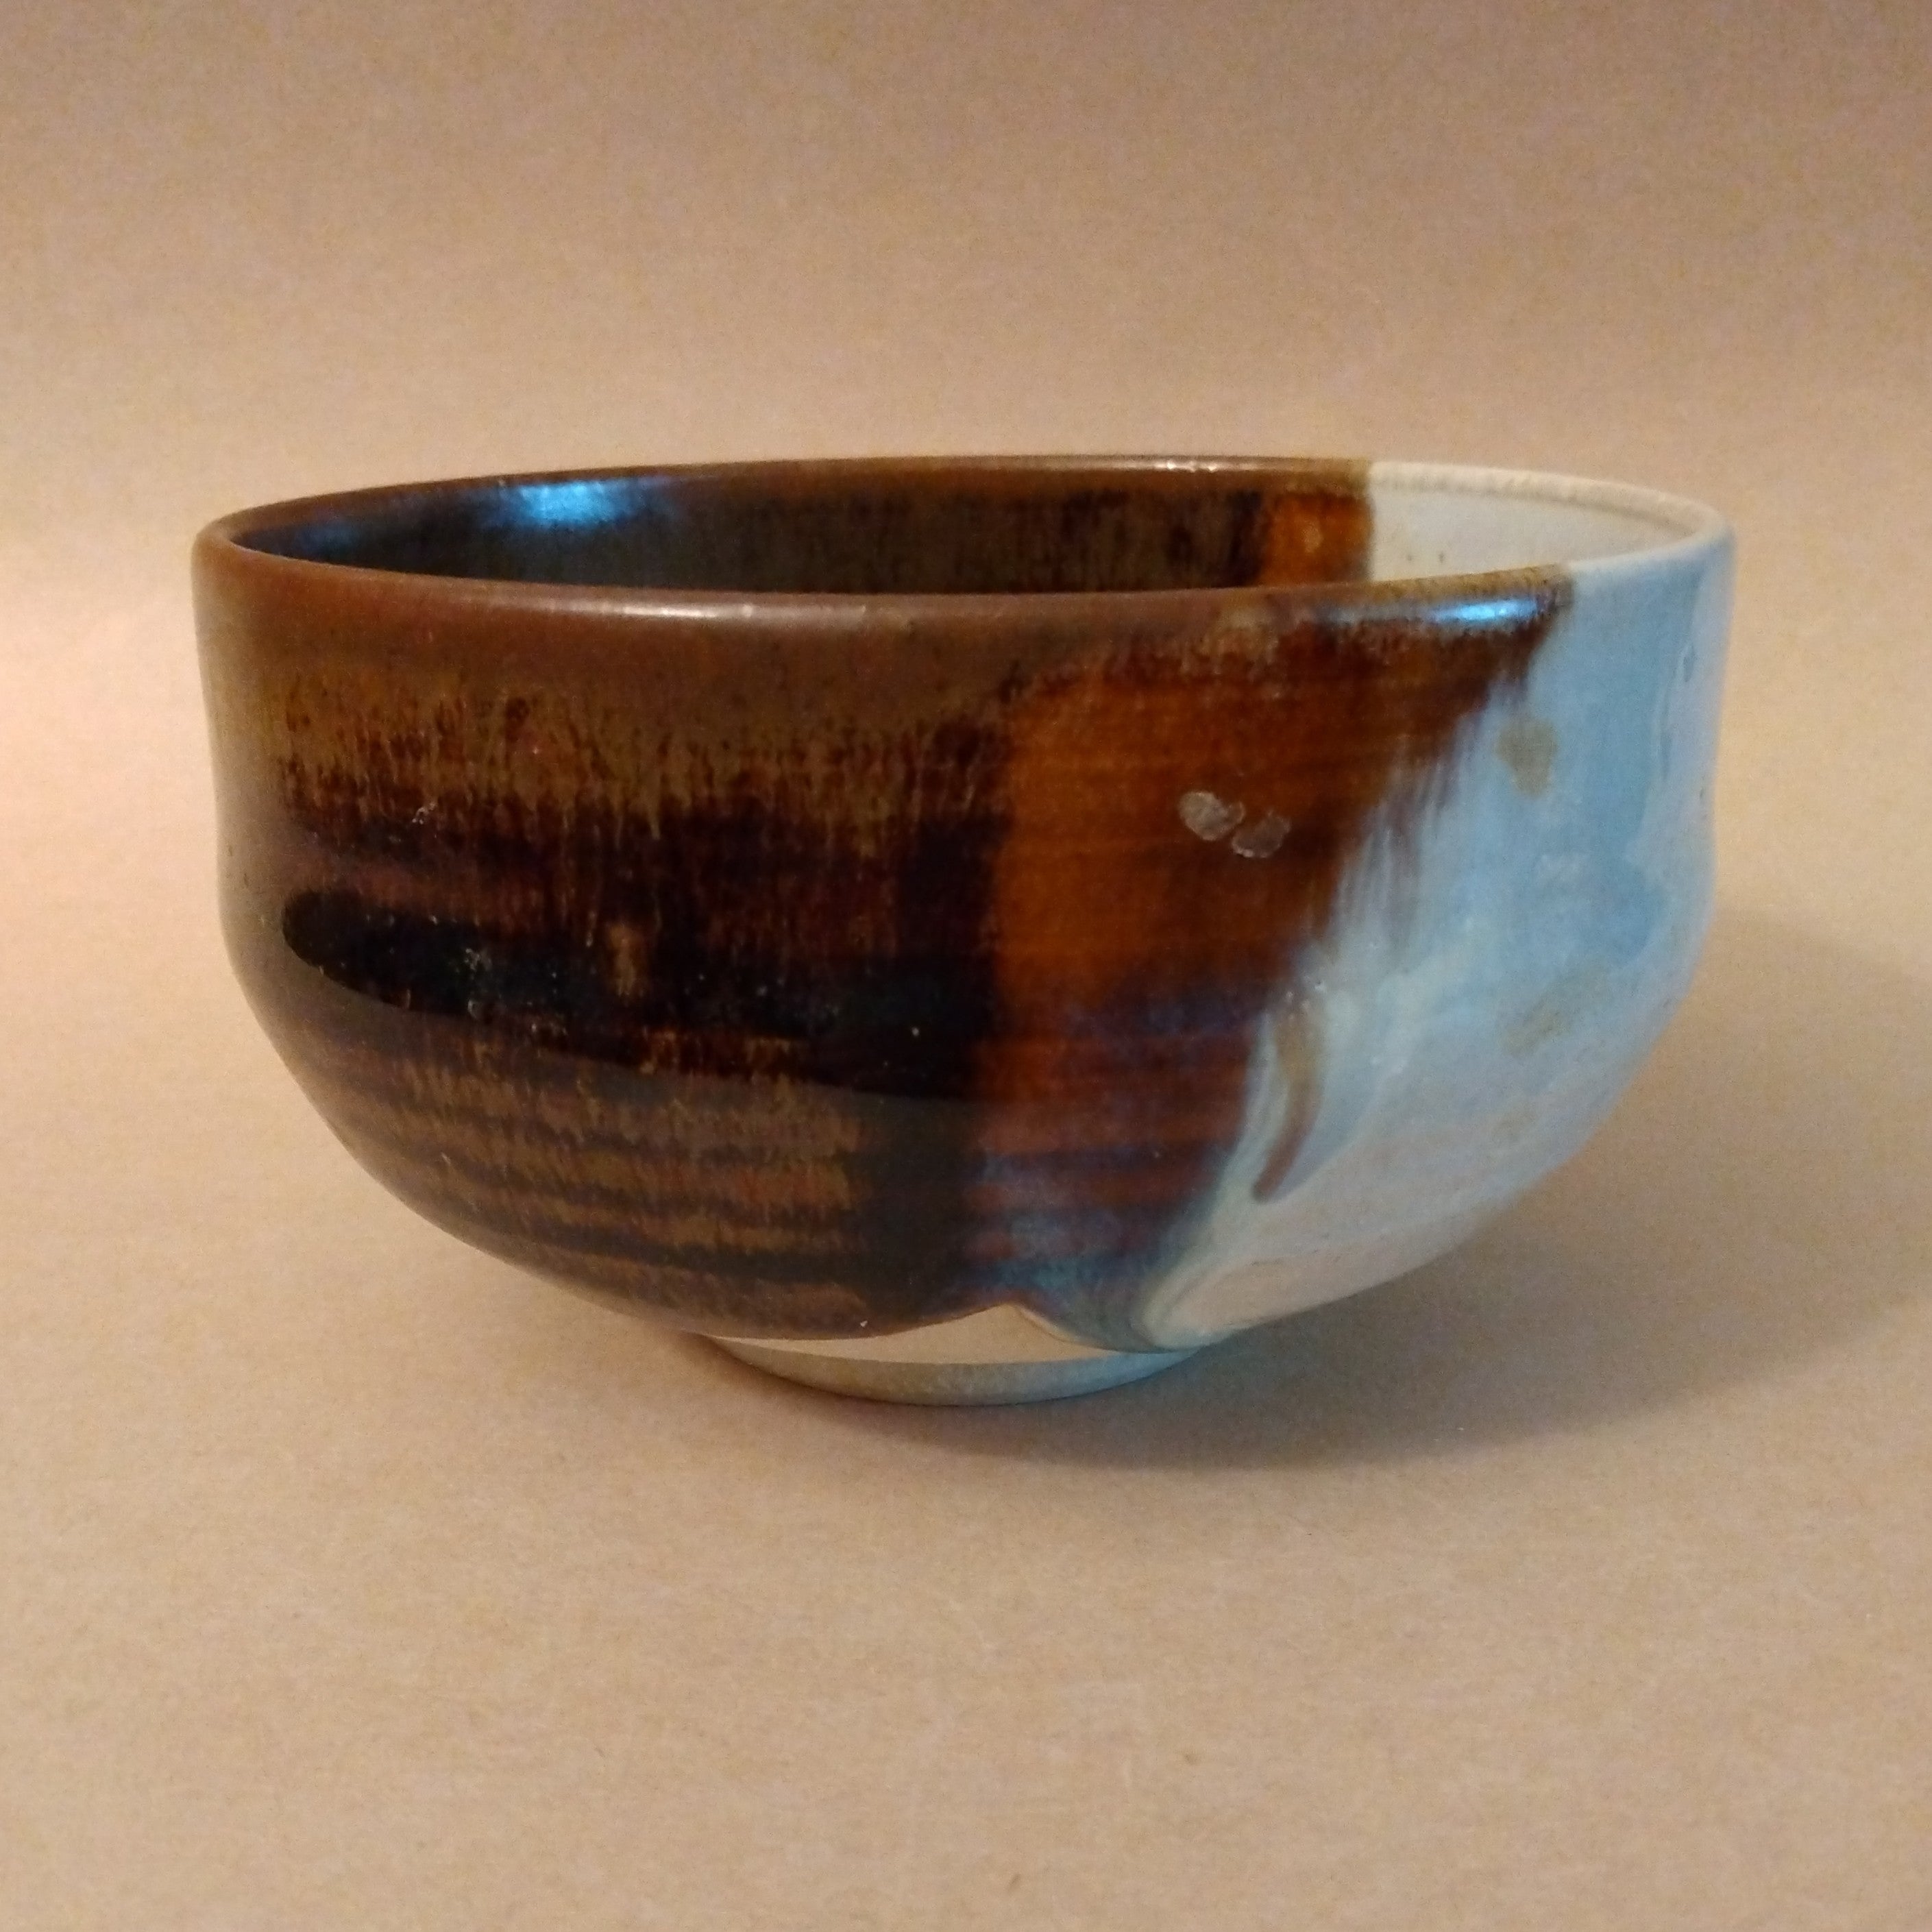 Matcha Chawan (Tea Bowl) with Kakewake (split glaze) Decoration, Unknown Potter, Vintage; Thiel Collection